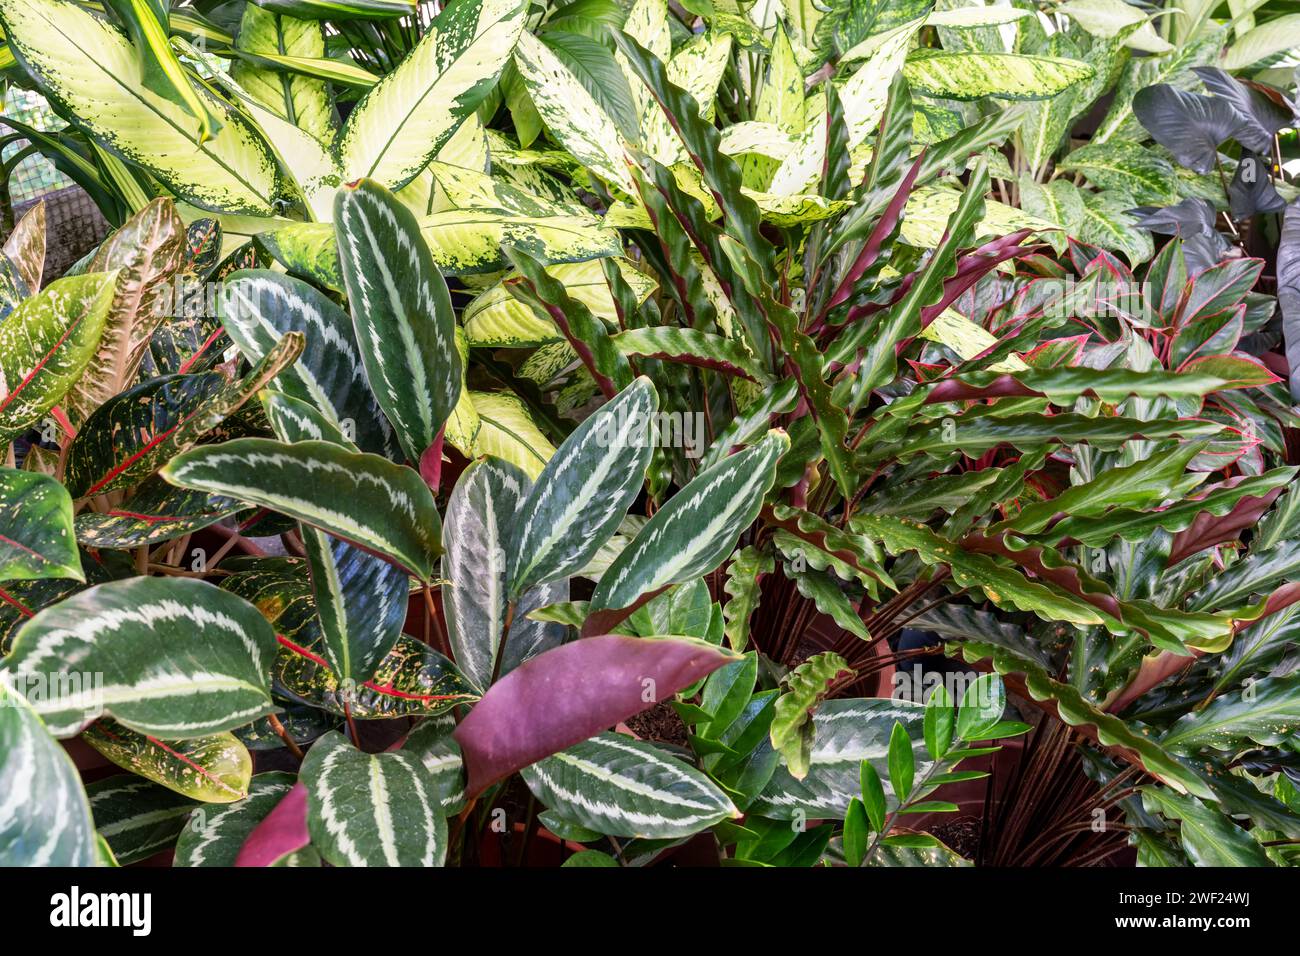 Calathea Prayer Plants Medallions and Evergreen Aglaonema plant backgrounds Stock Photo